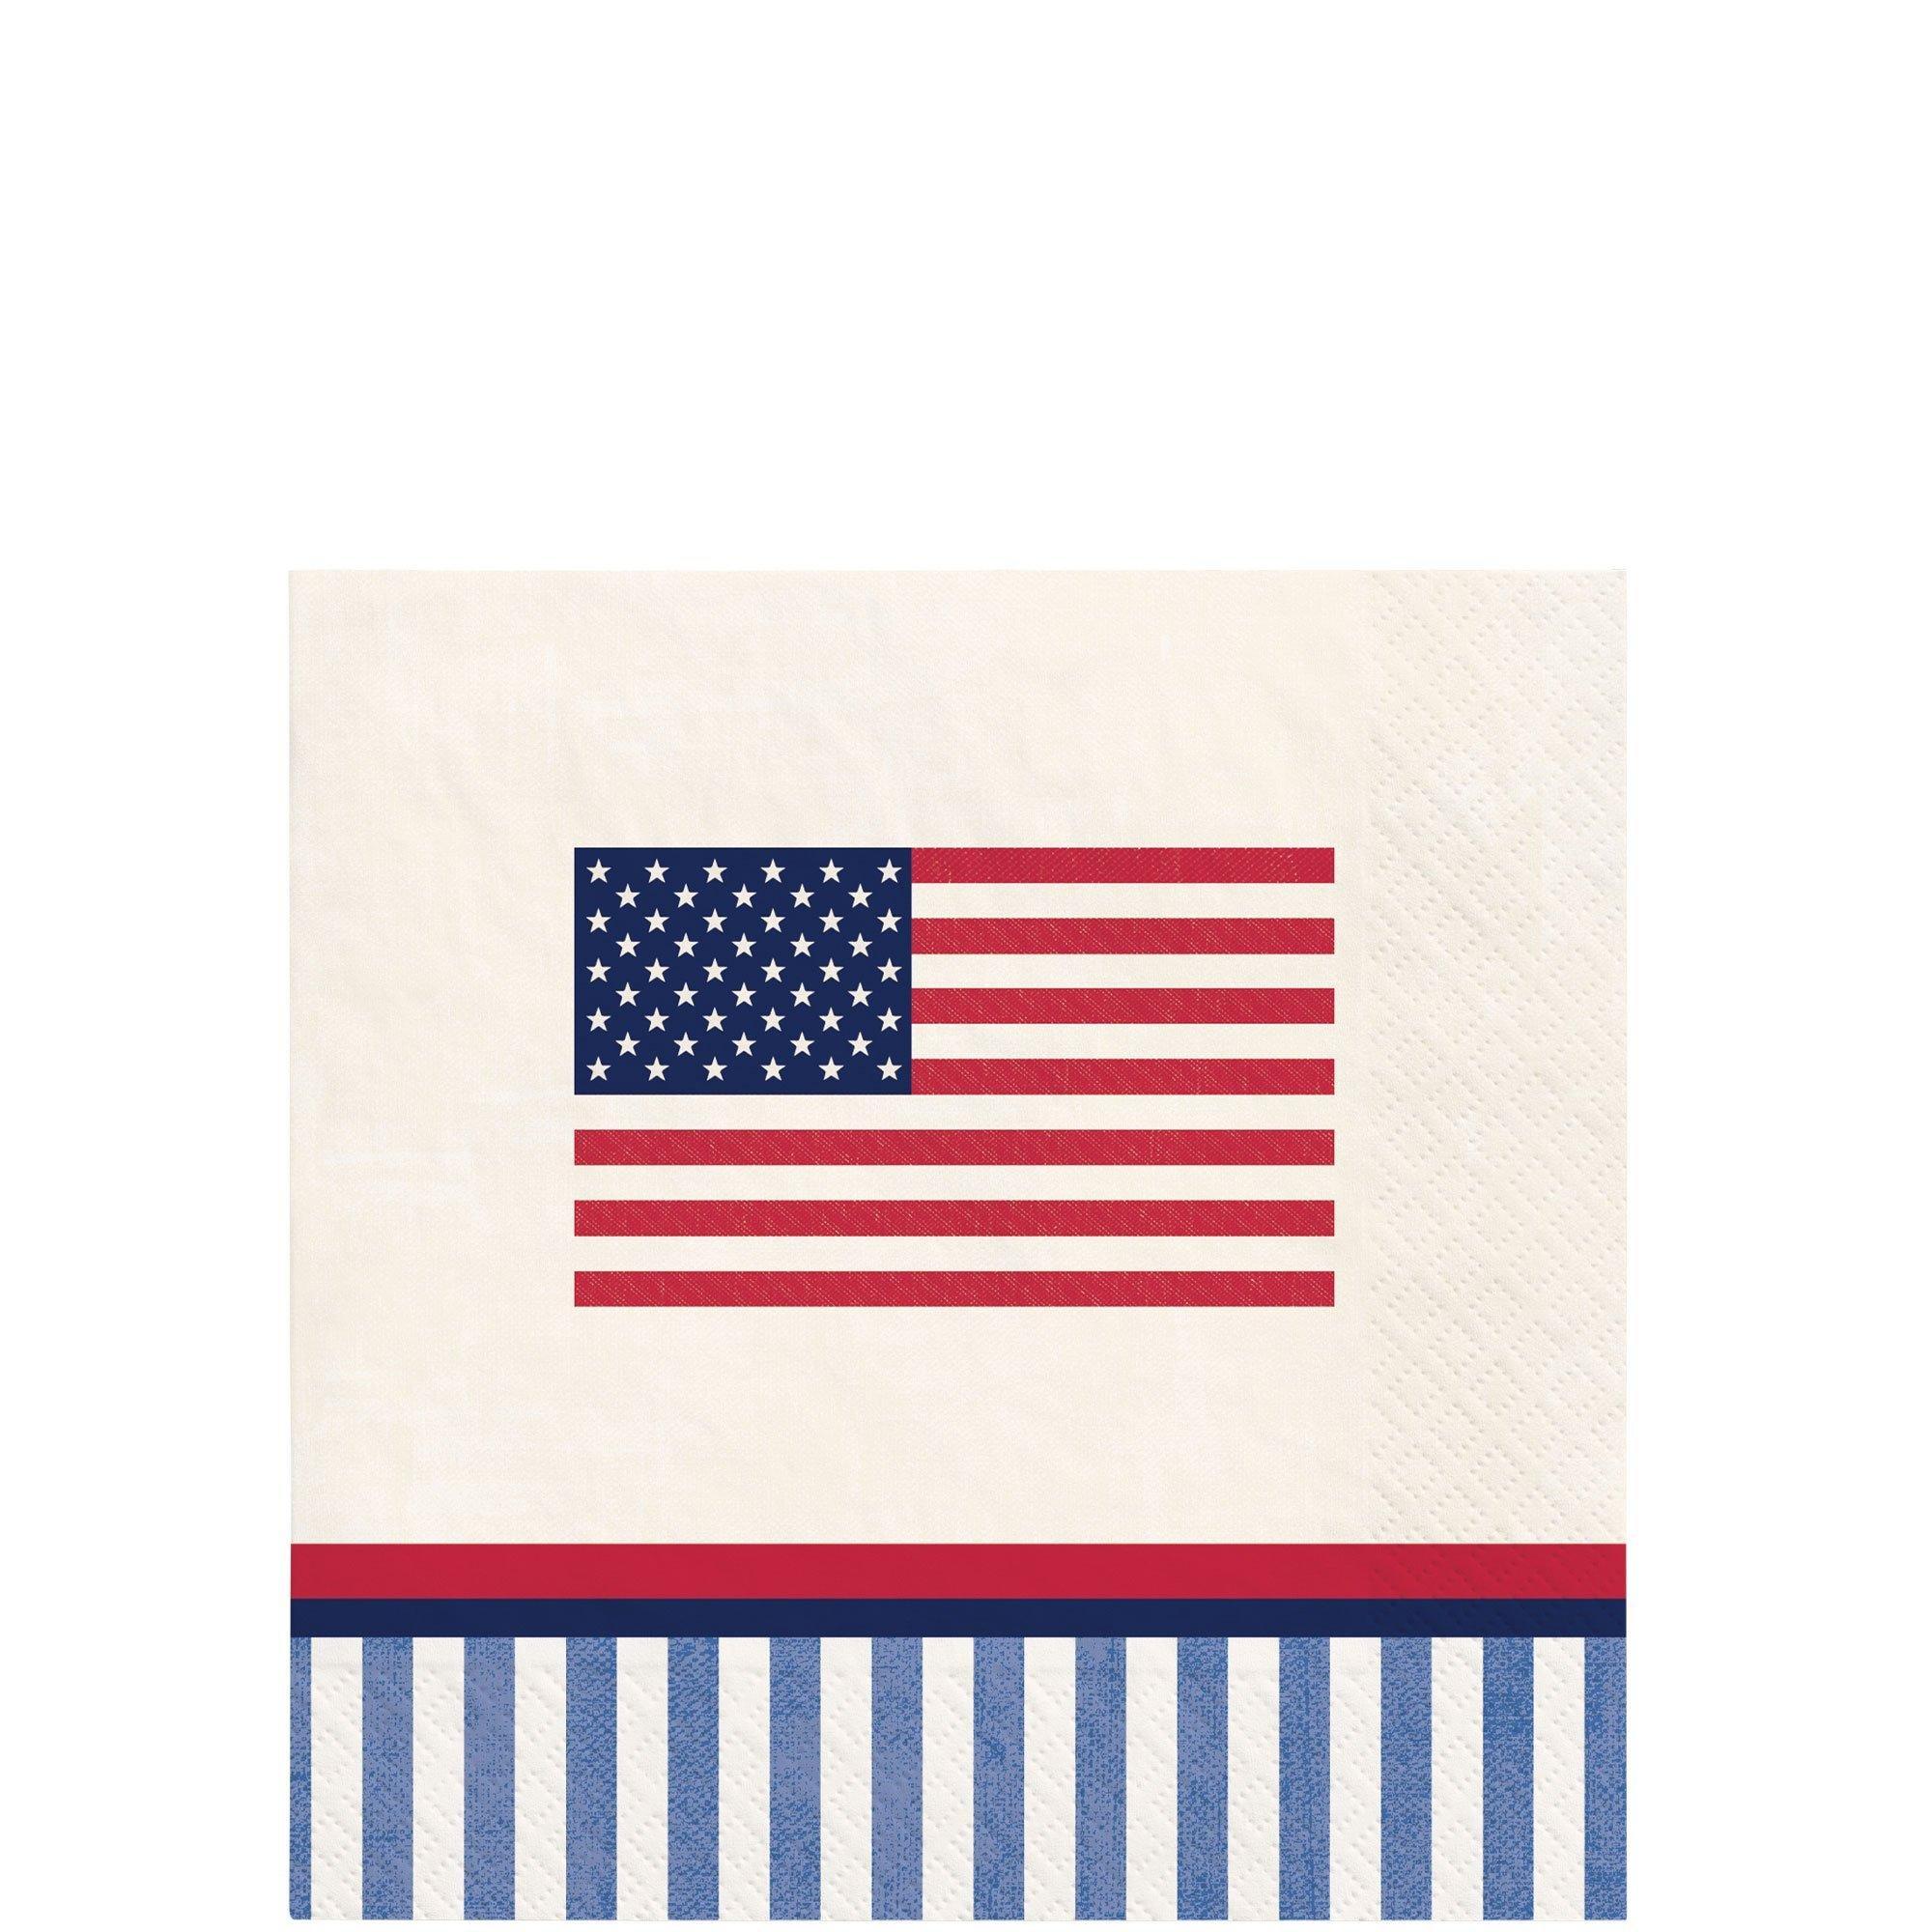 Americana Stripe Tableware Kit for 16 Guests